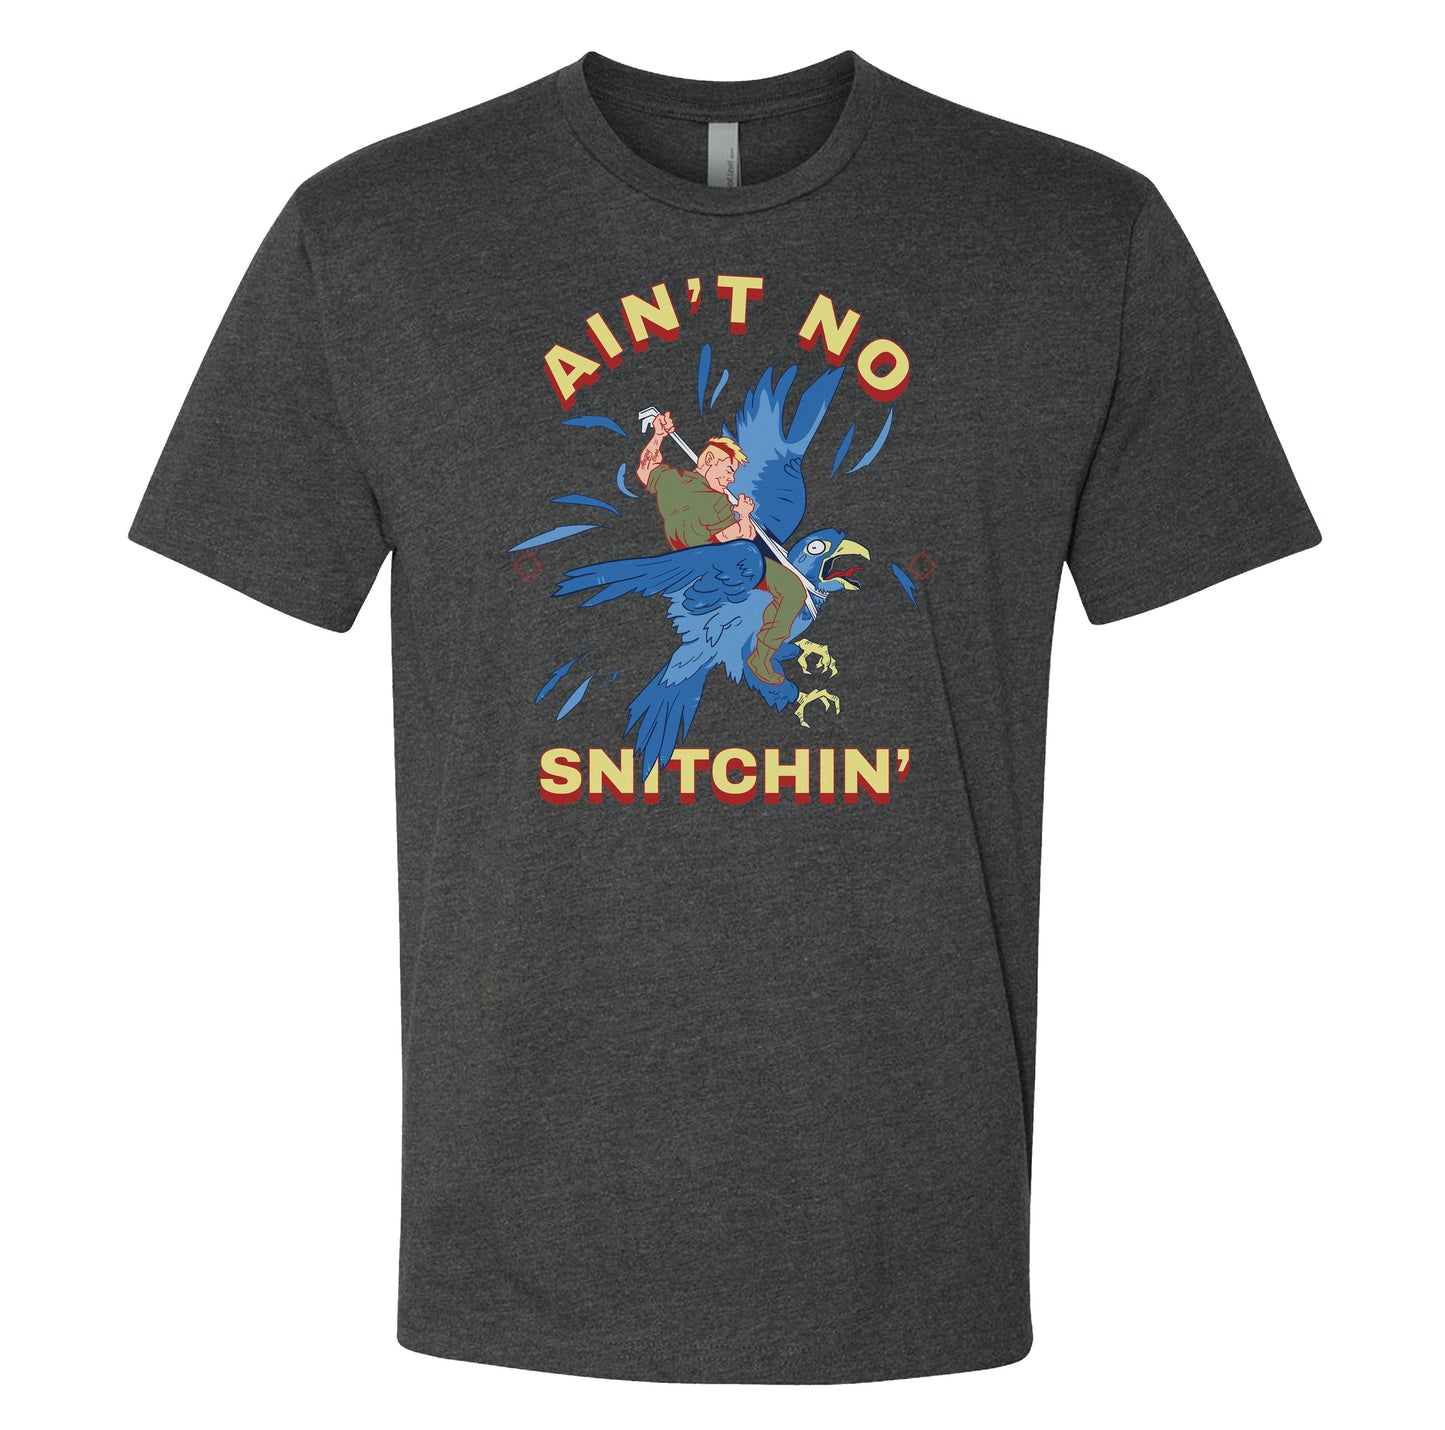 Ain't No Snitchin' Tee